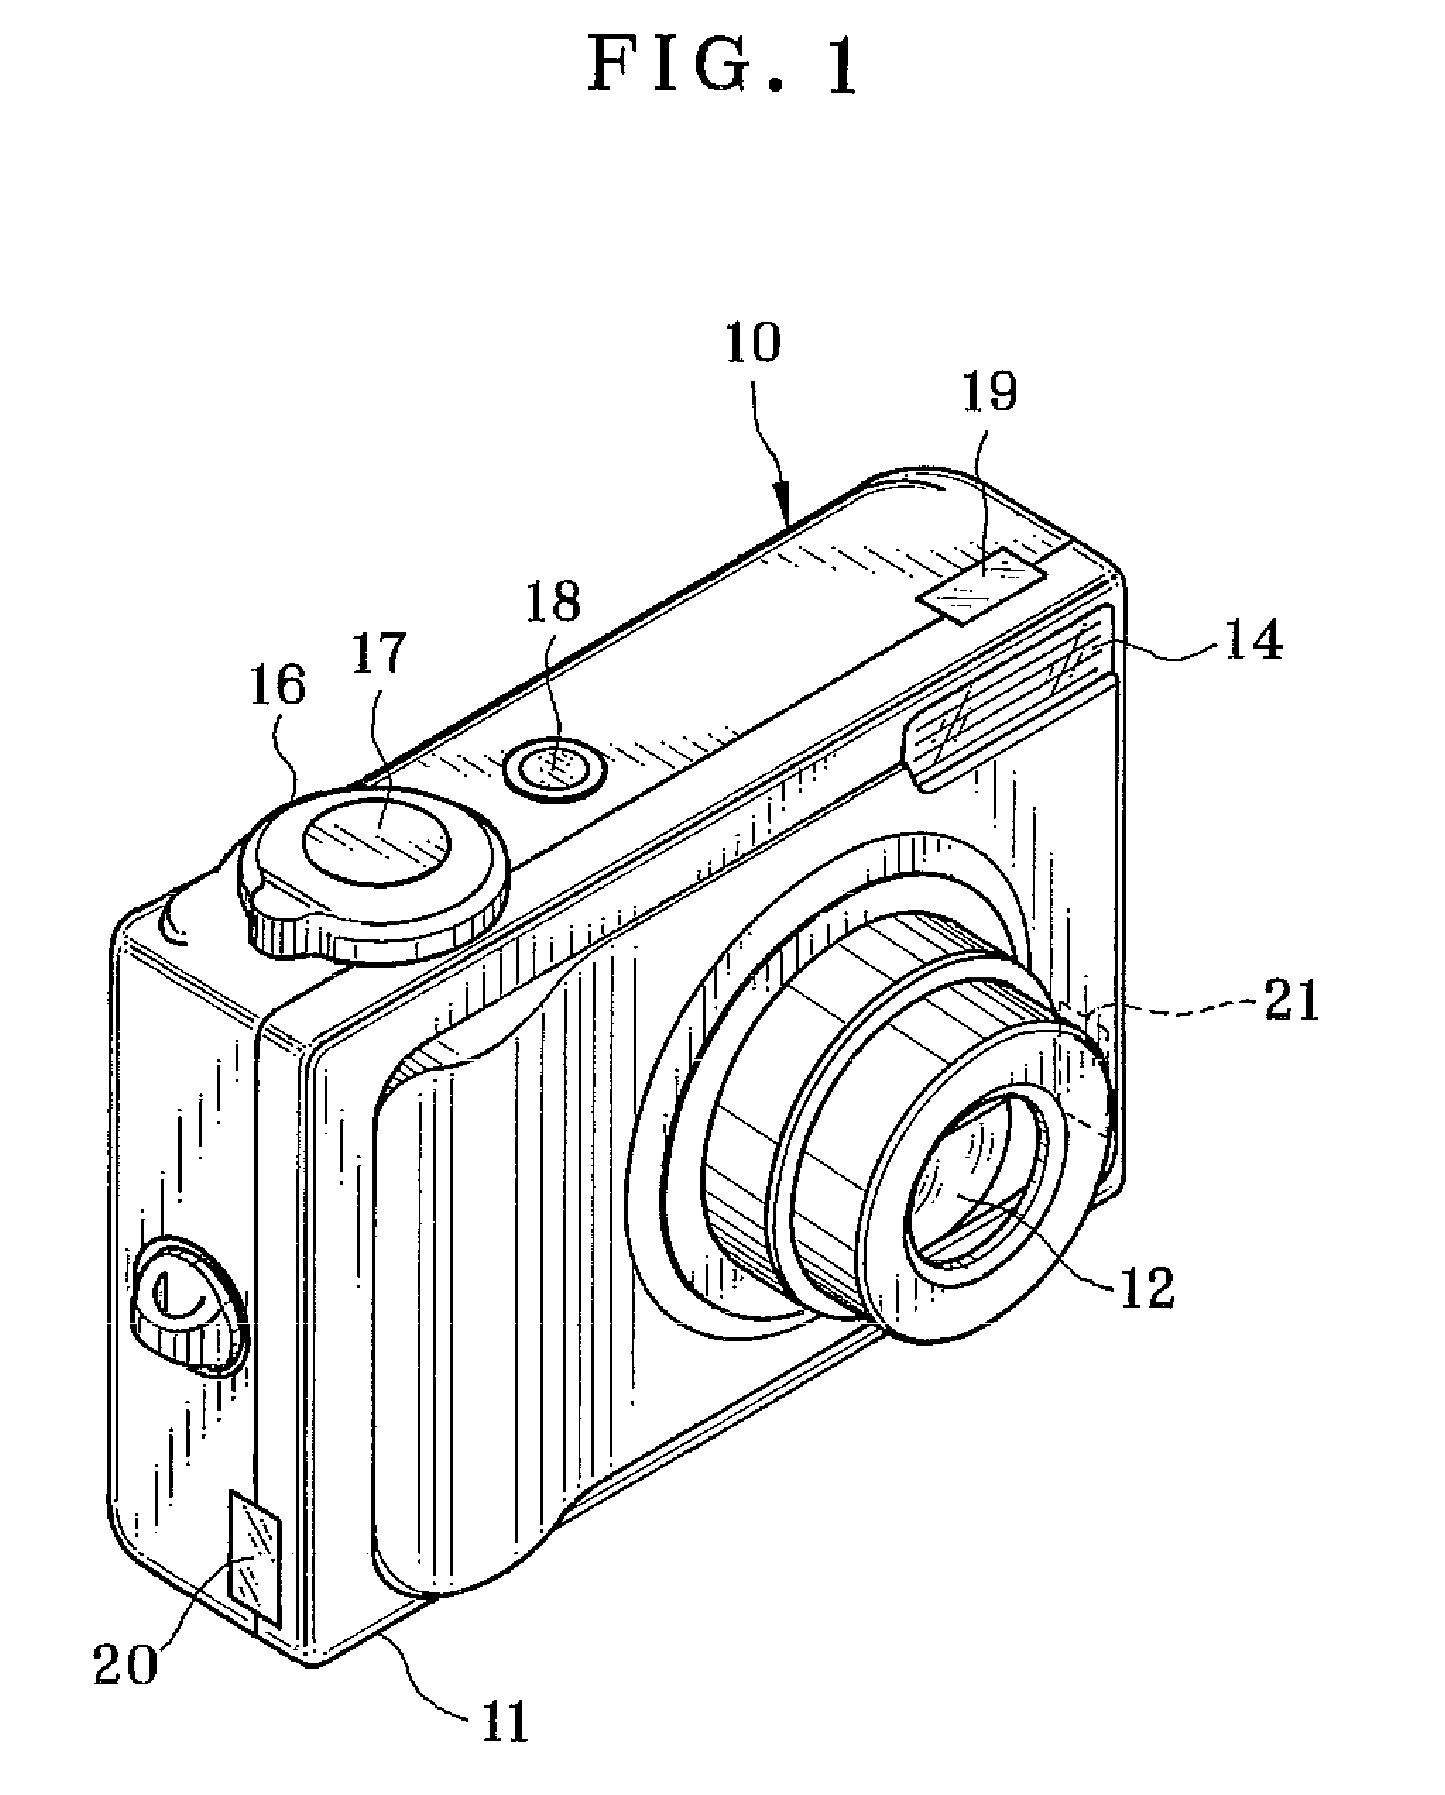 Image pickup apparatus and method